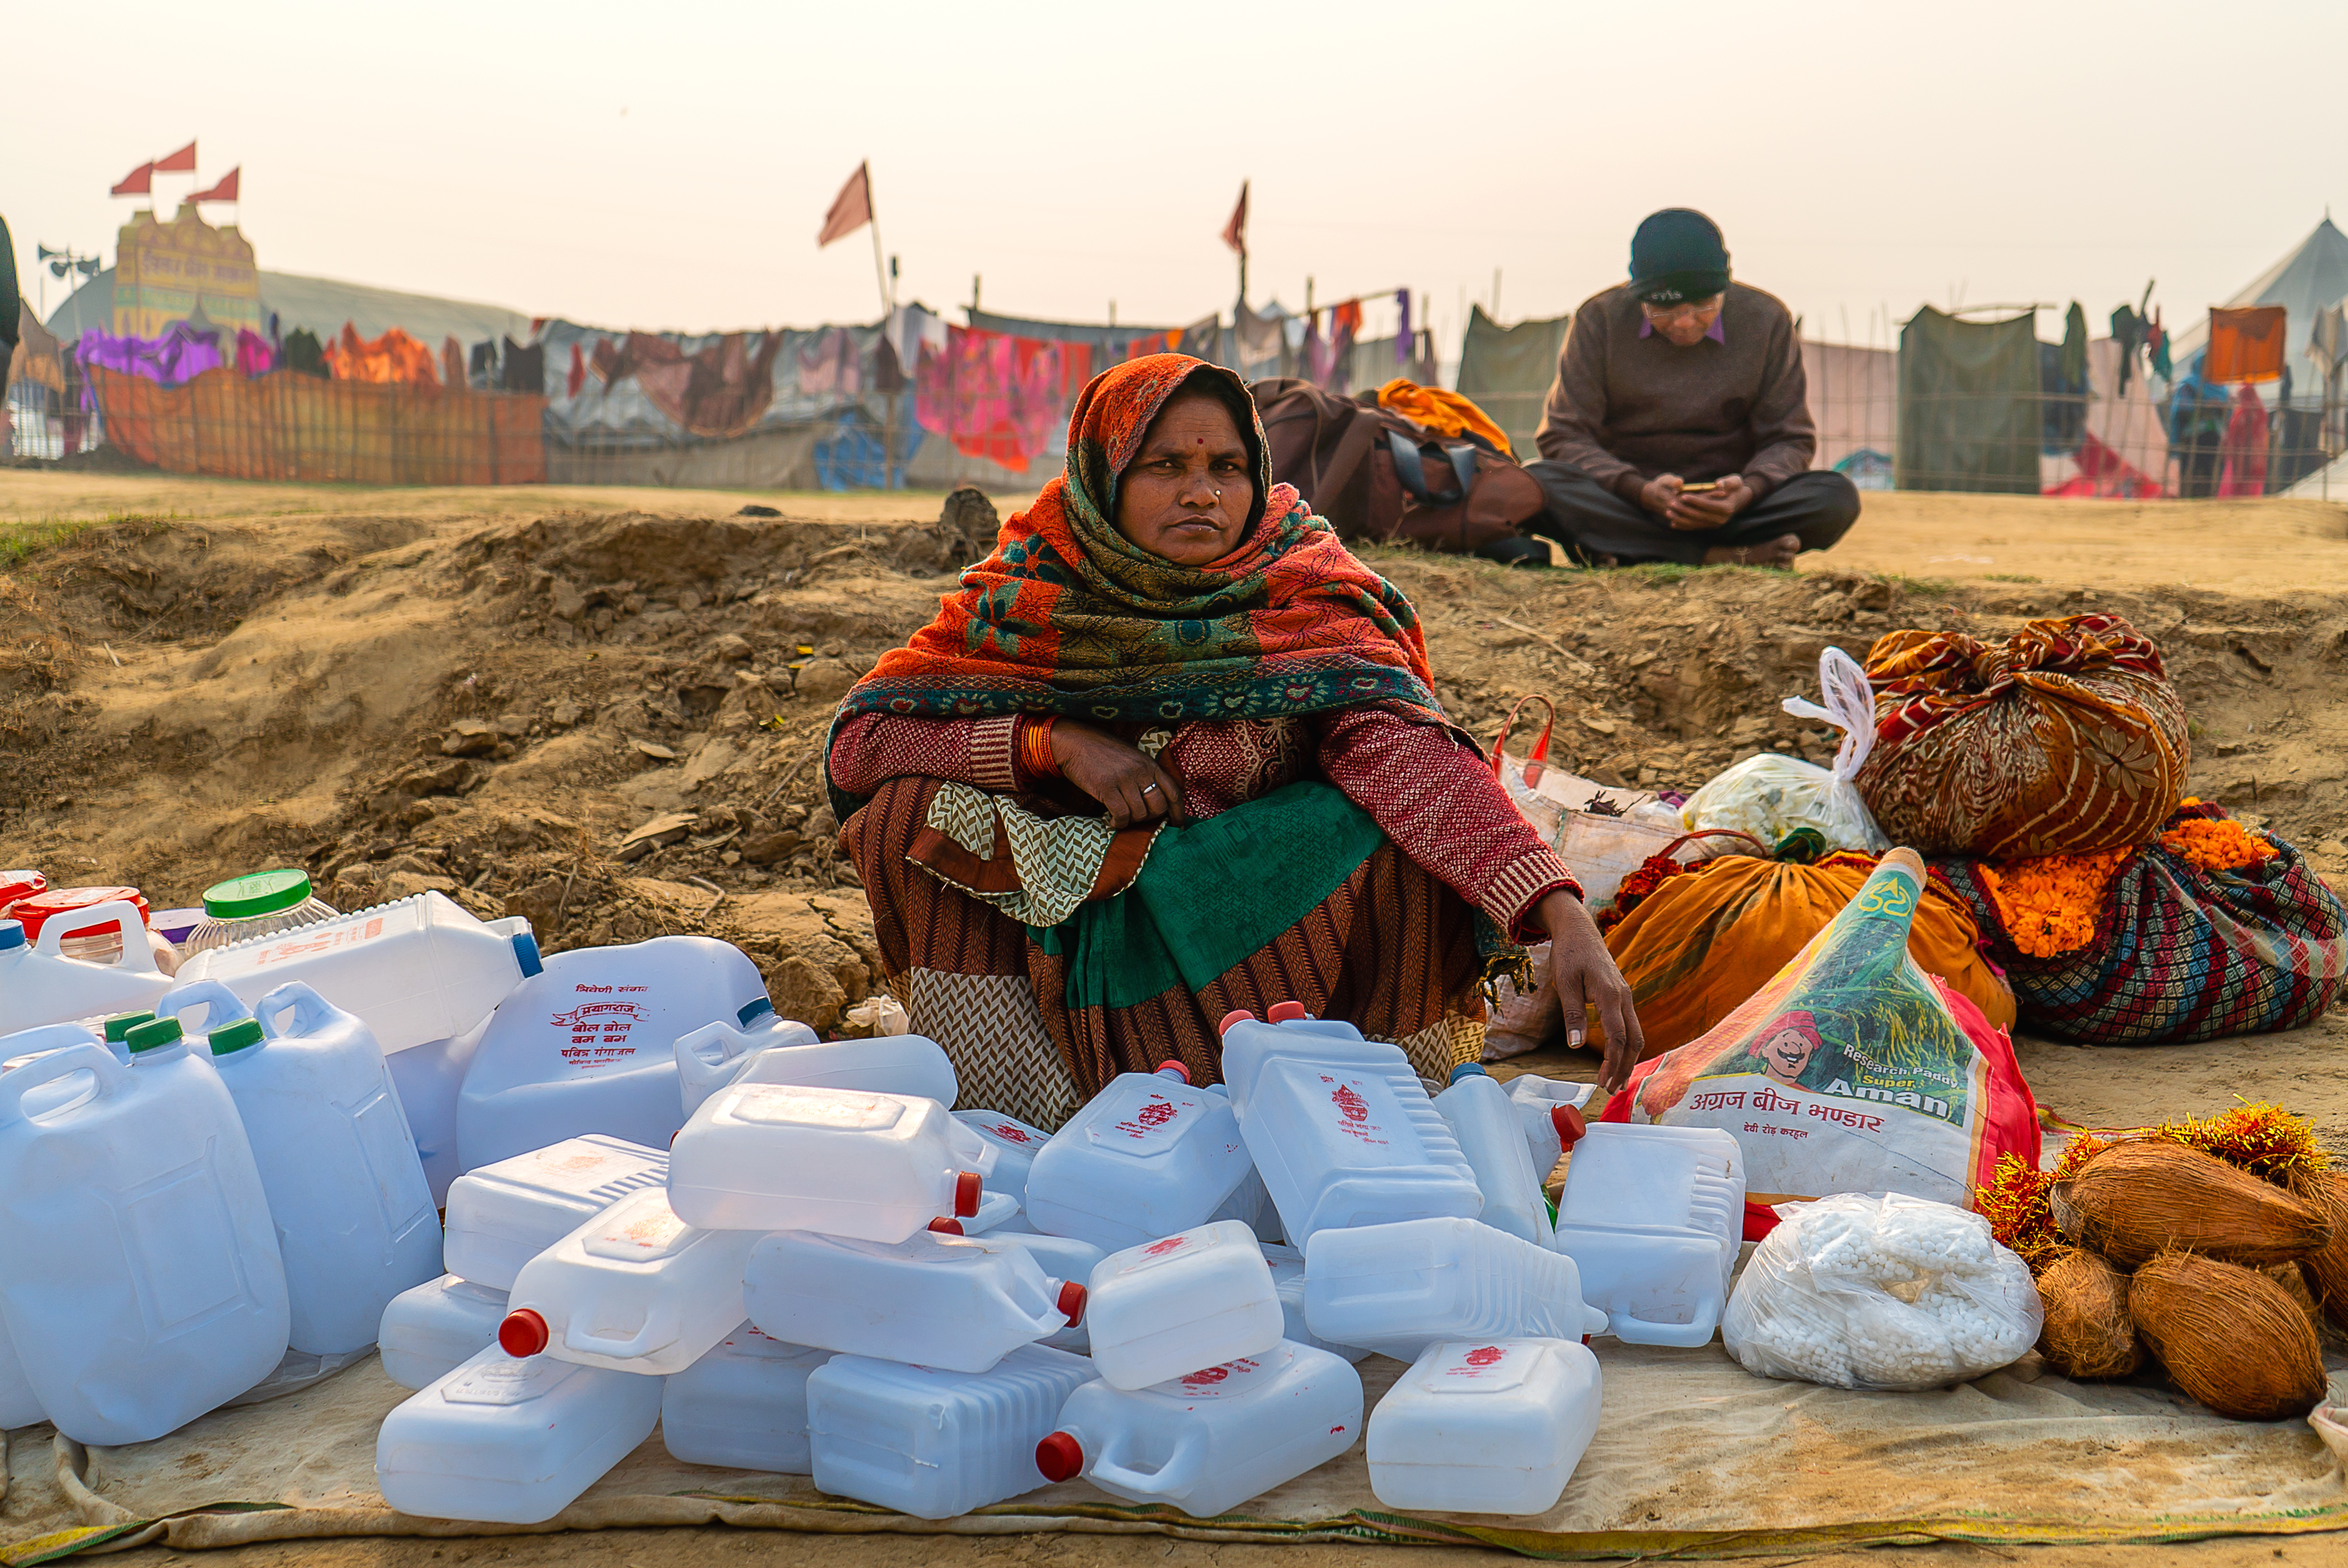 Woman Sells Water Jugs to take Holy Water from Kumbh Mela 2019